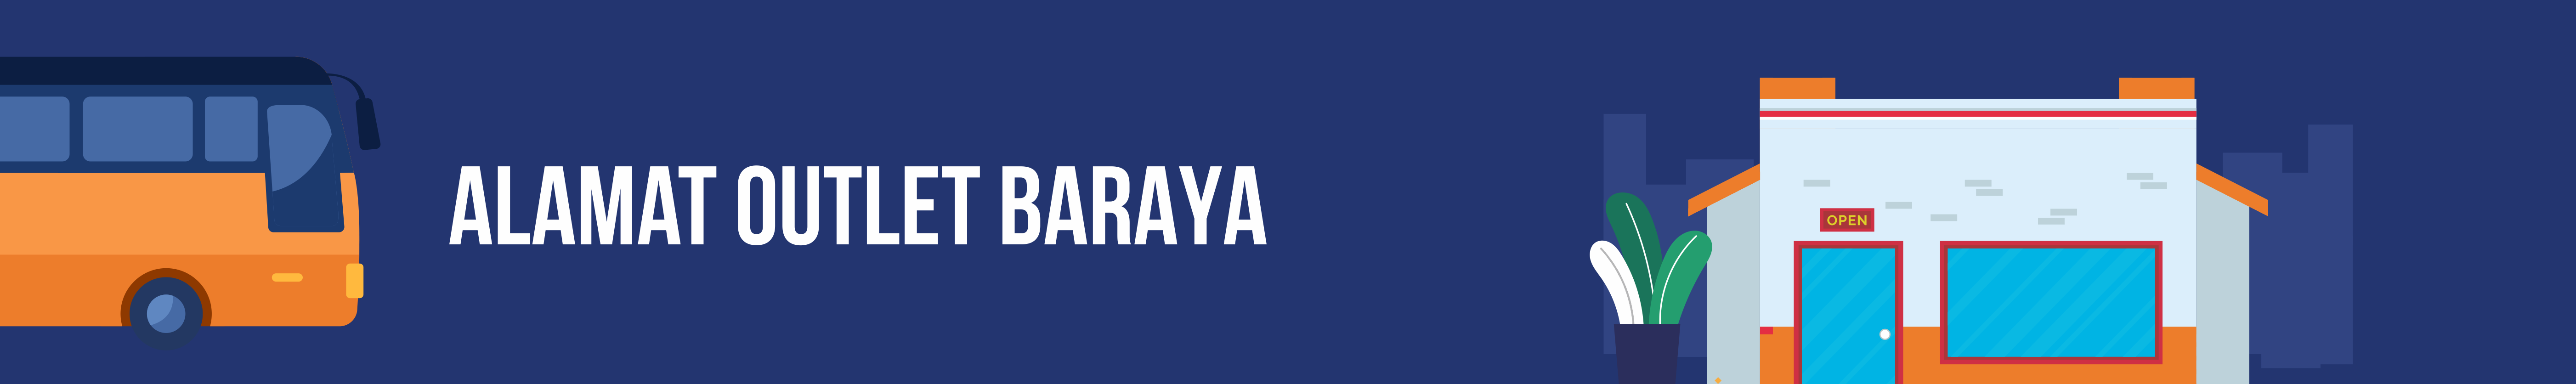 baraya travel pasteur